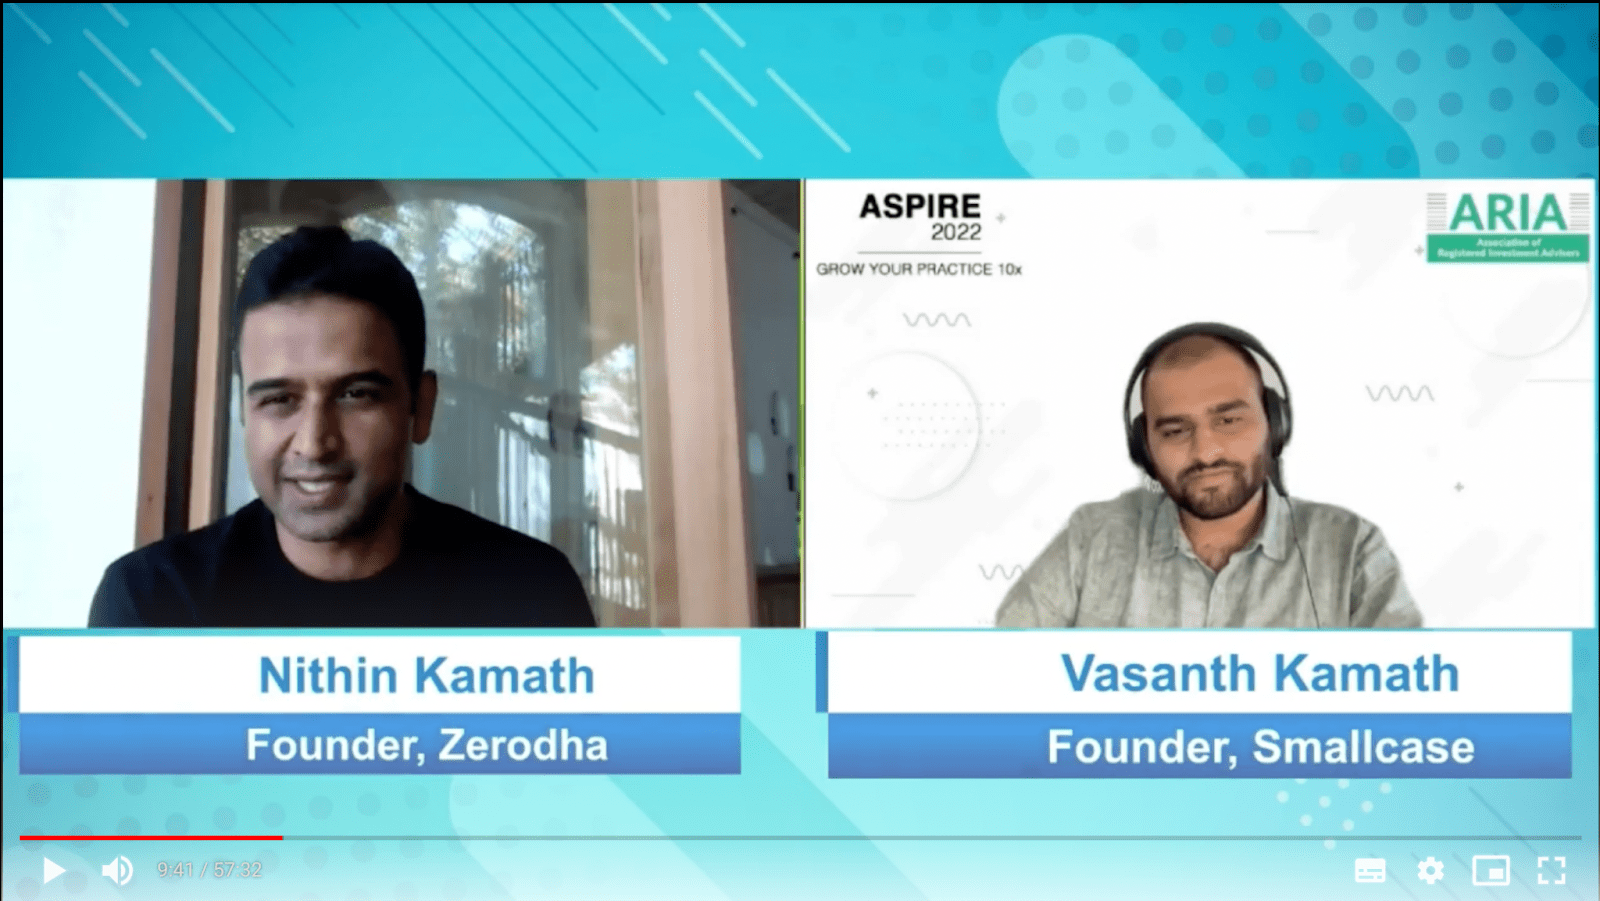 Fintech Forward: Vasanth Kamath in conversation with Nithin Kamath